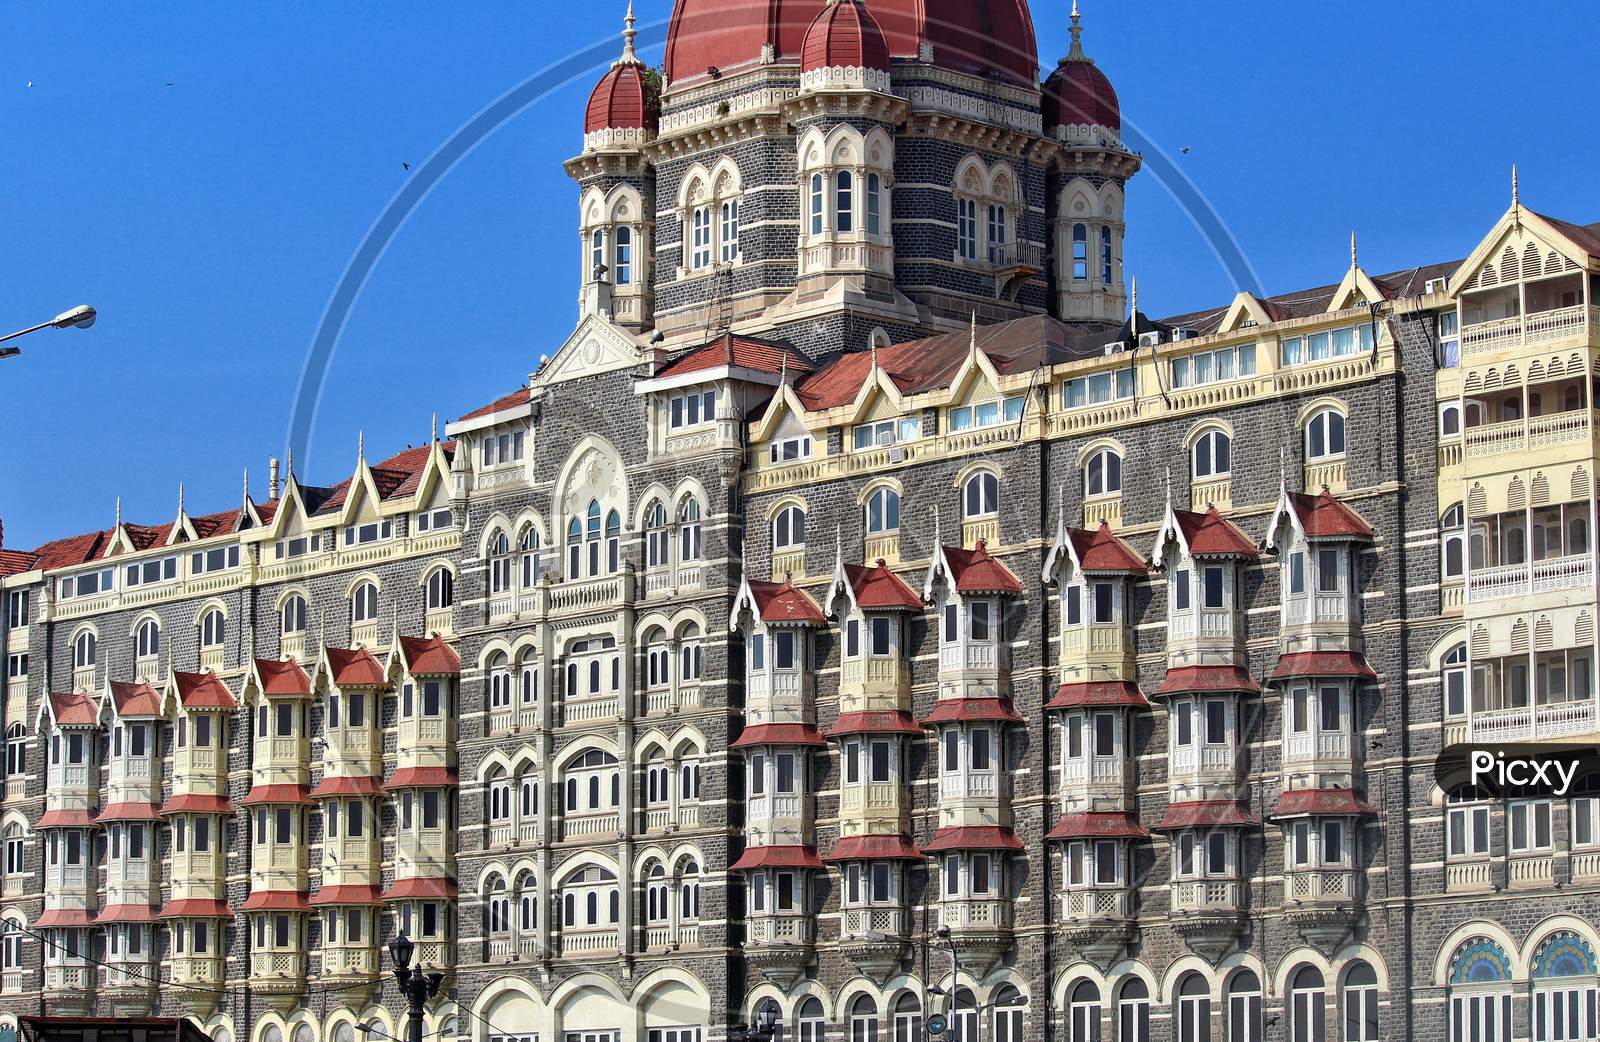 Mumbai, India - February 14, 2018: The Taj Mahal Hotel In The City Cente, The Gateway Of India